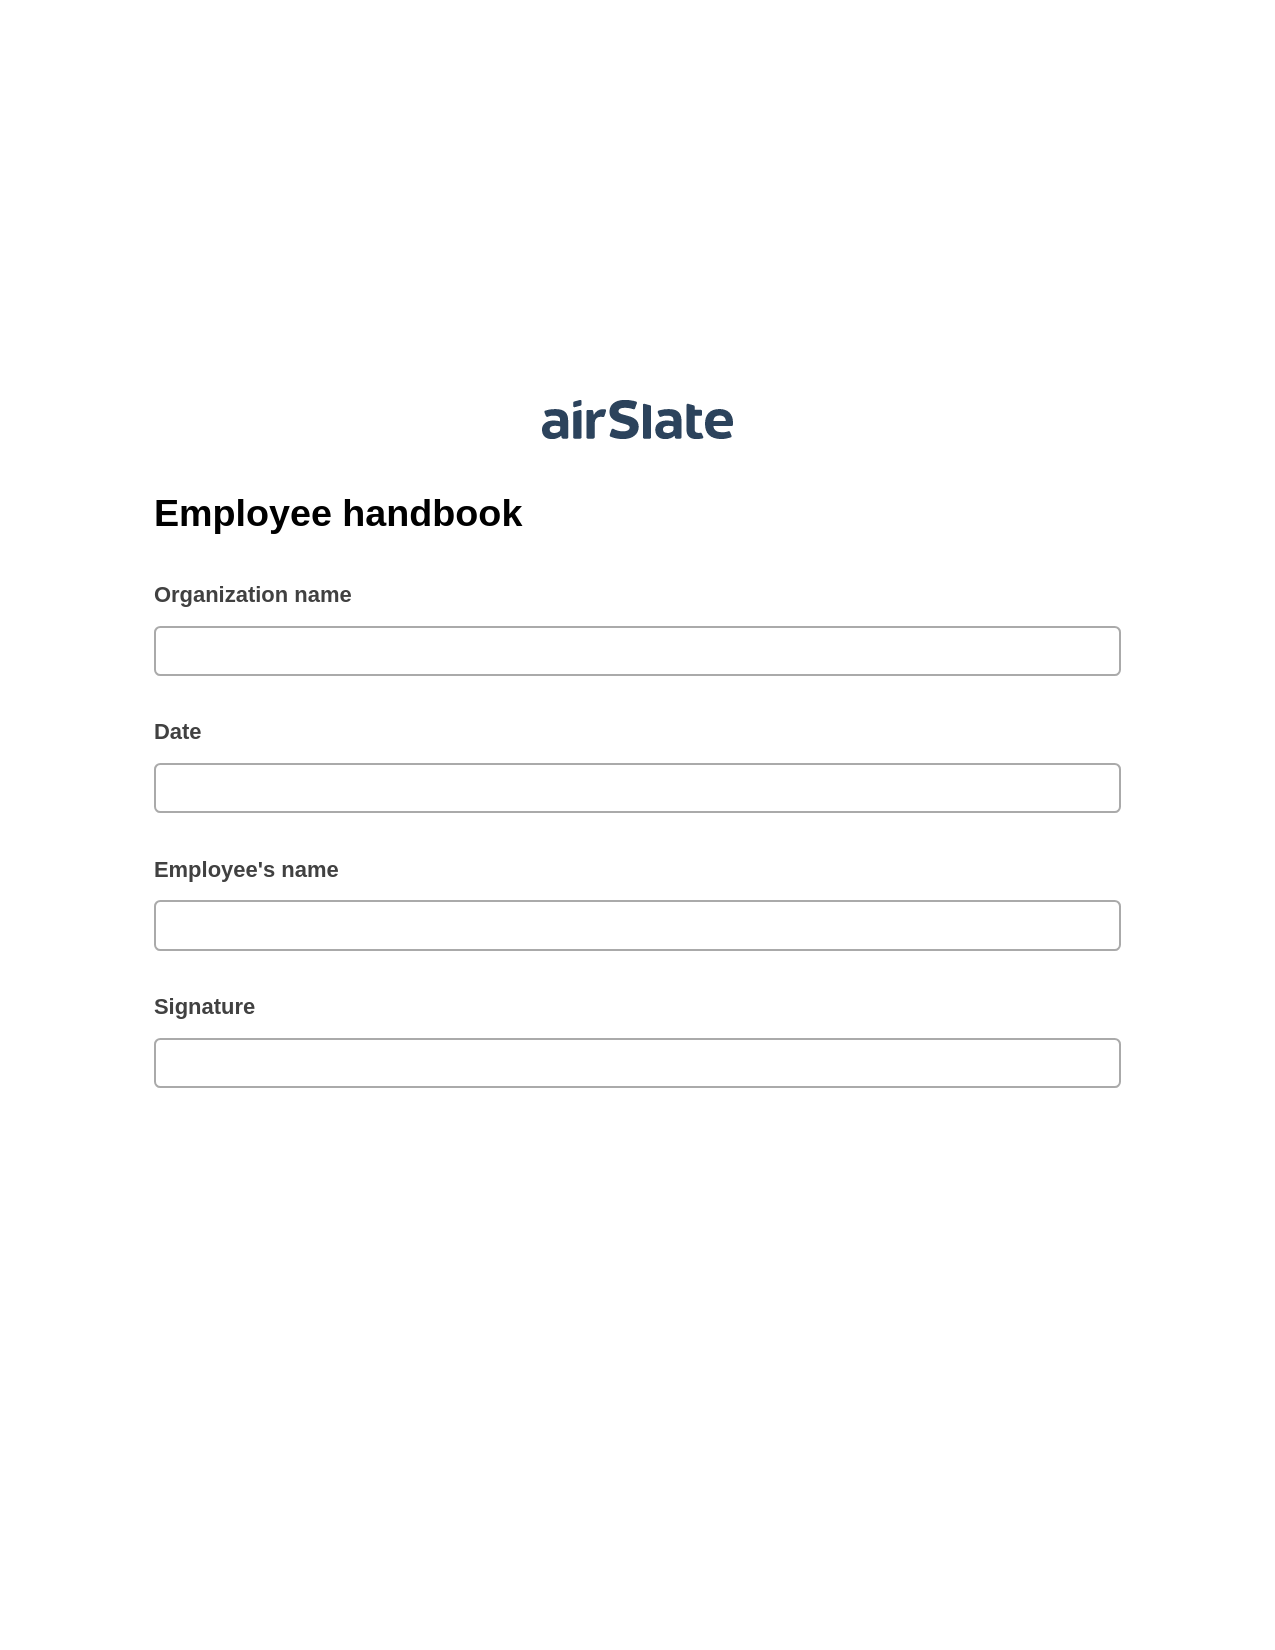 Employee handbook Pre-fill from Excel Spreadsheet Bot, Email Notification Bot, Box Bot